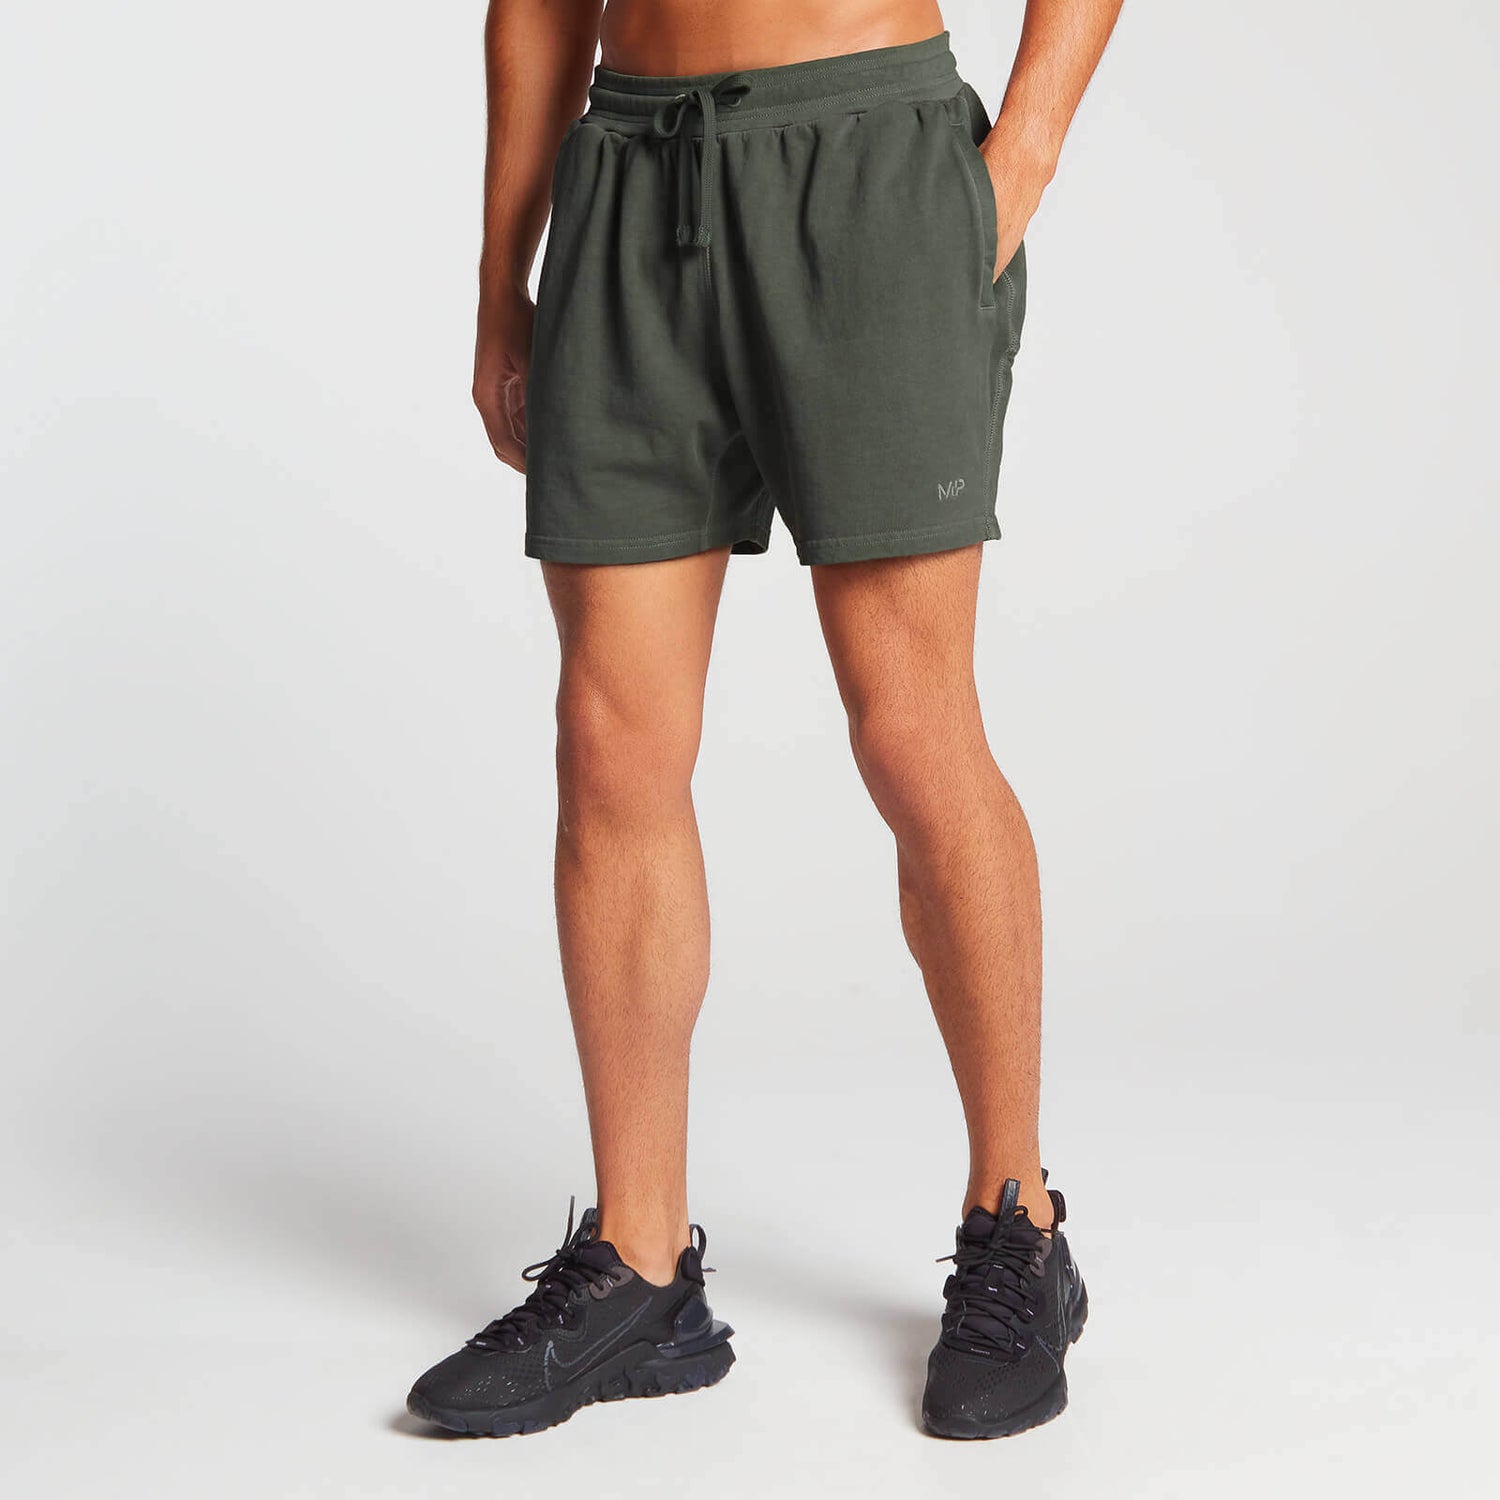 Pantaloncini sportivi da uomo MP - Verde foglia - XL